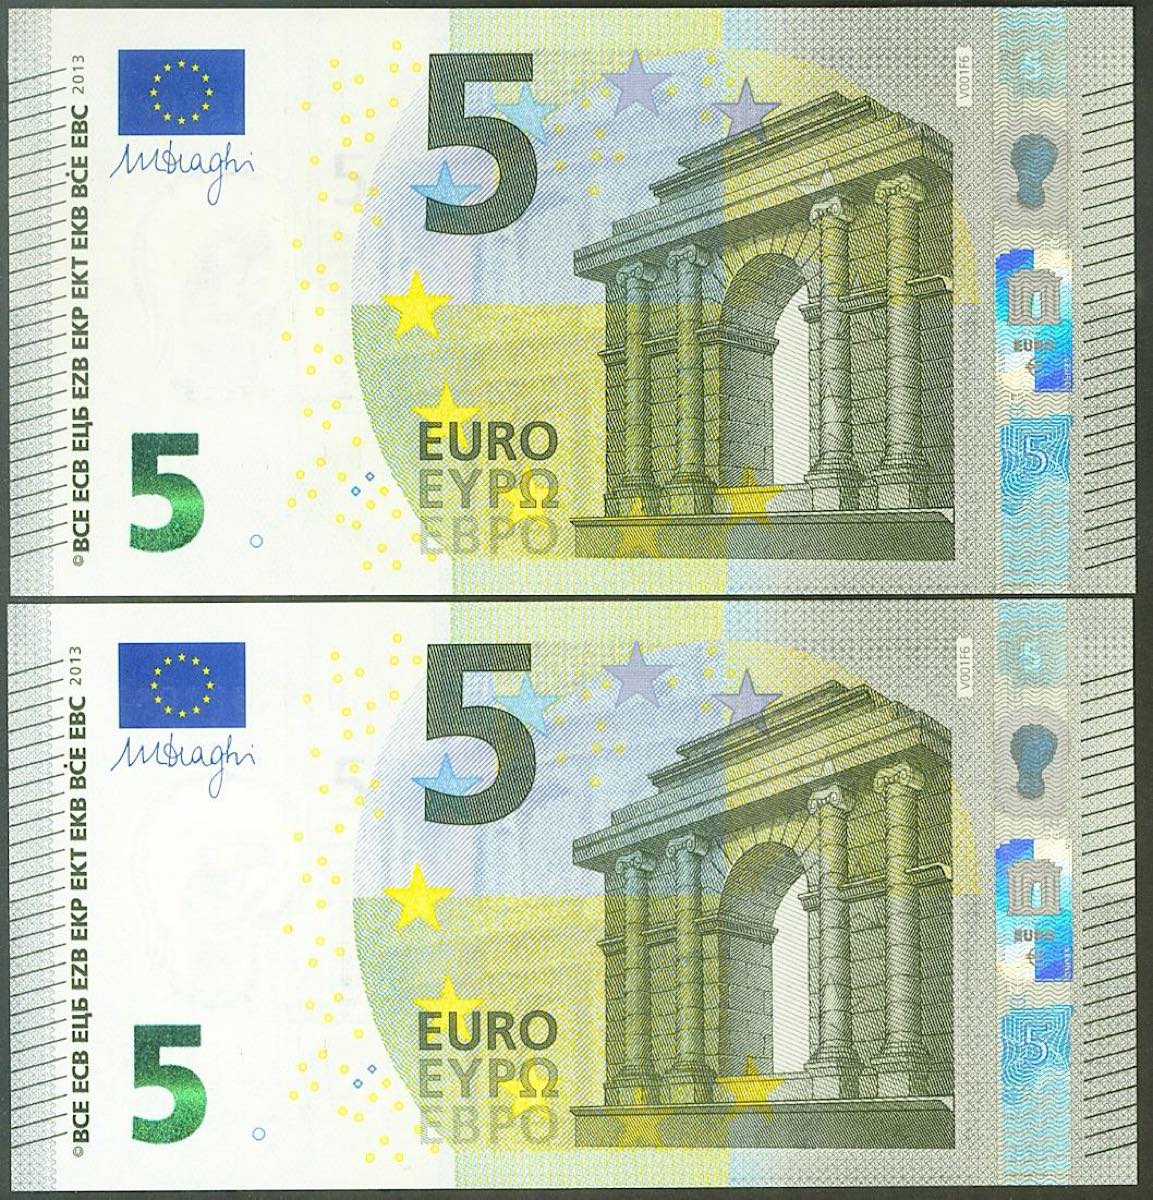 Billetes Euros - Ibercoin - Subastas Numismáticas